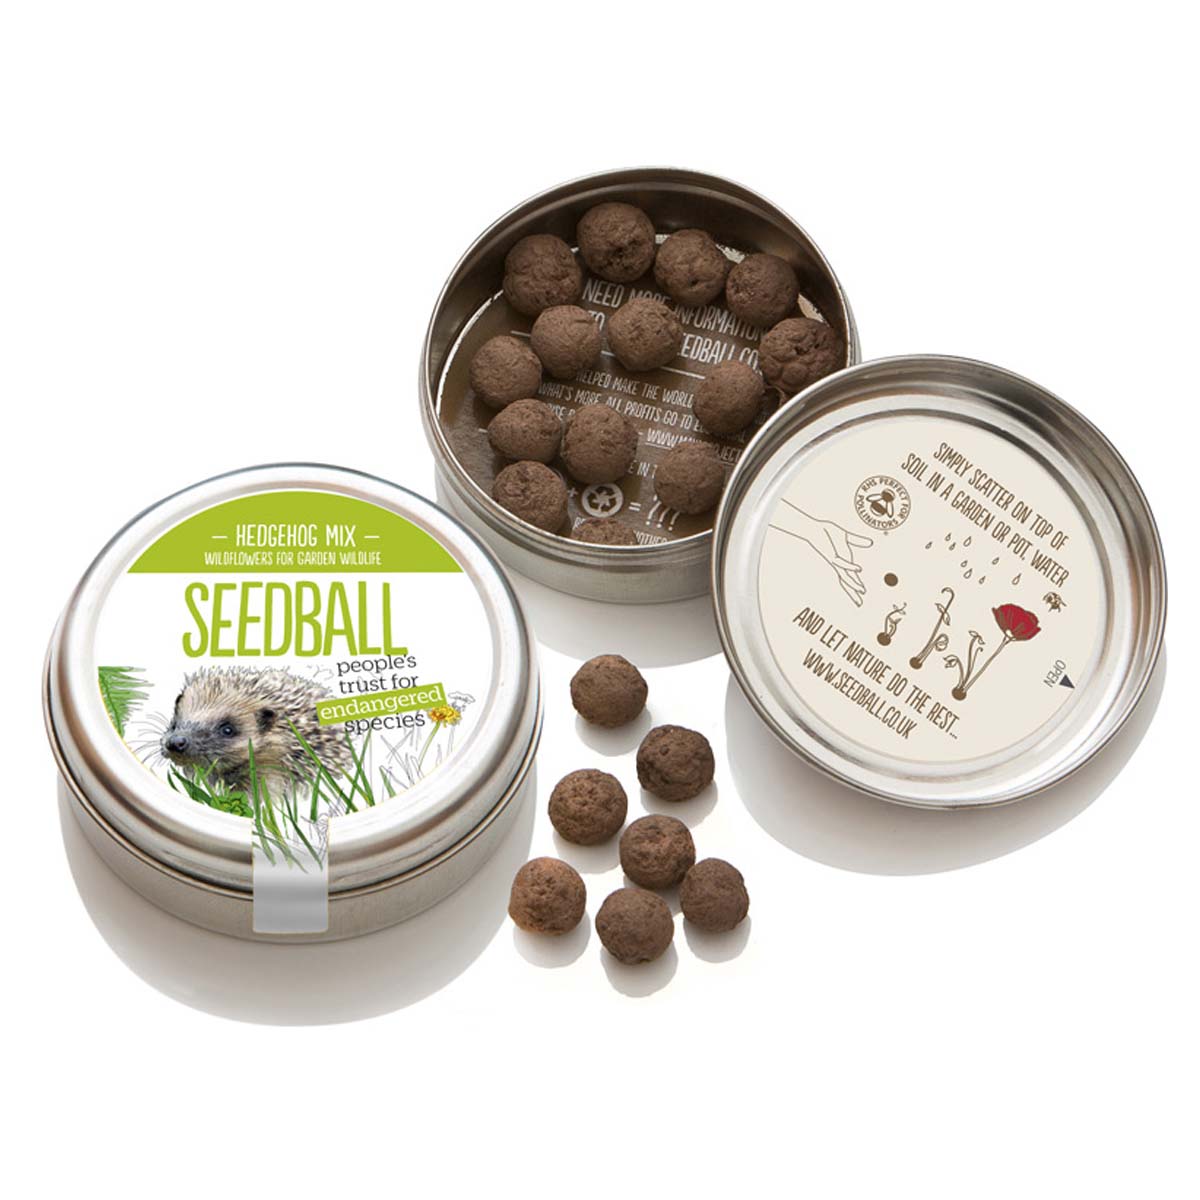 Hedgehog Mix Seedballs